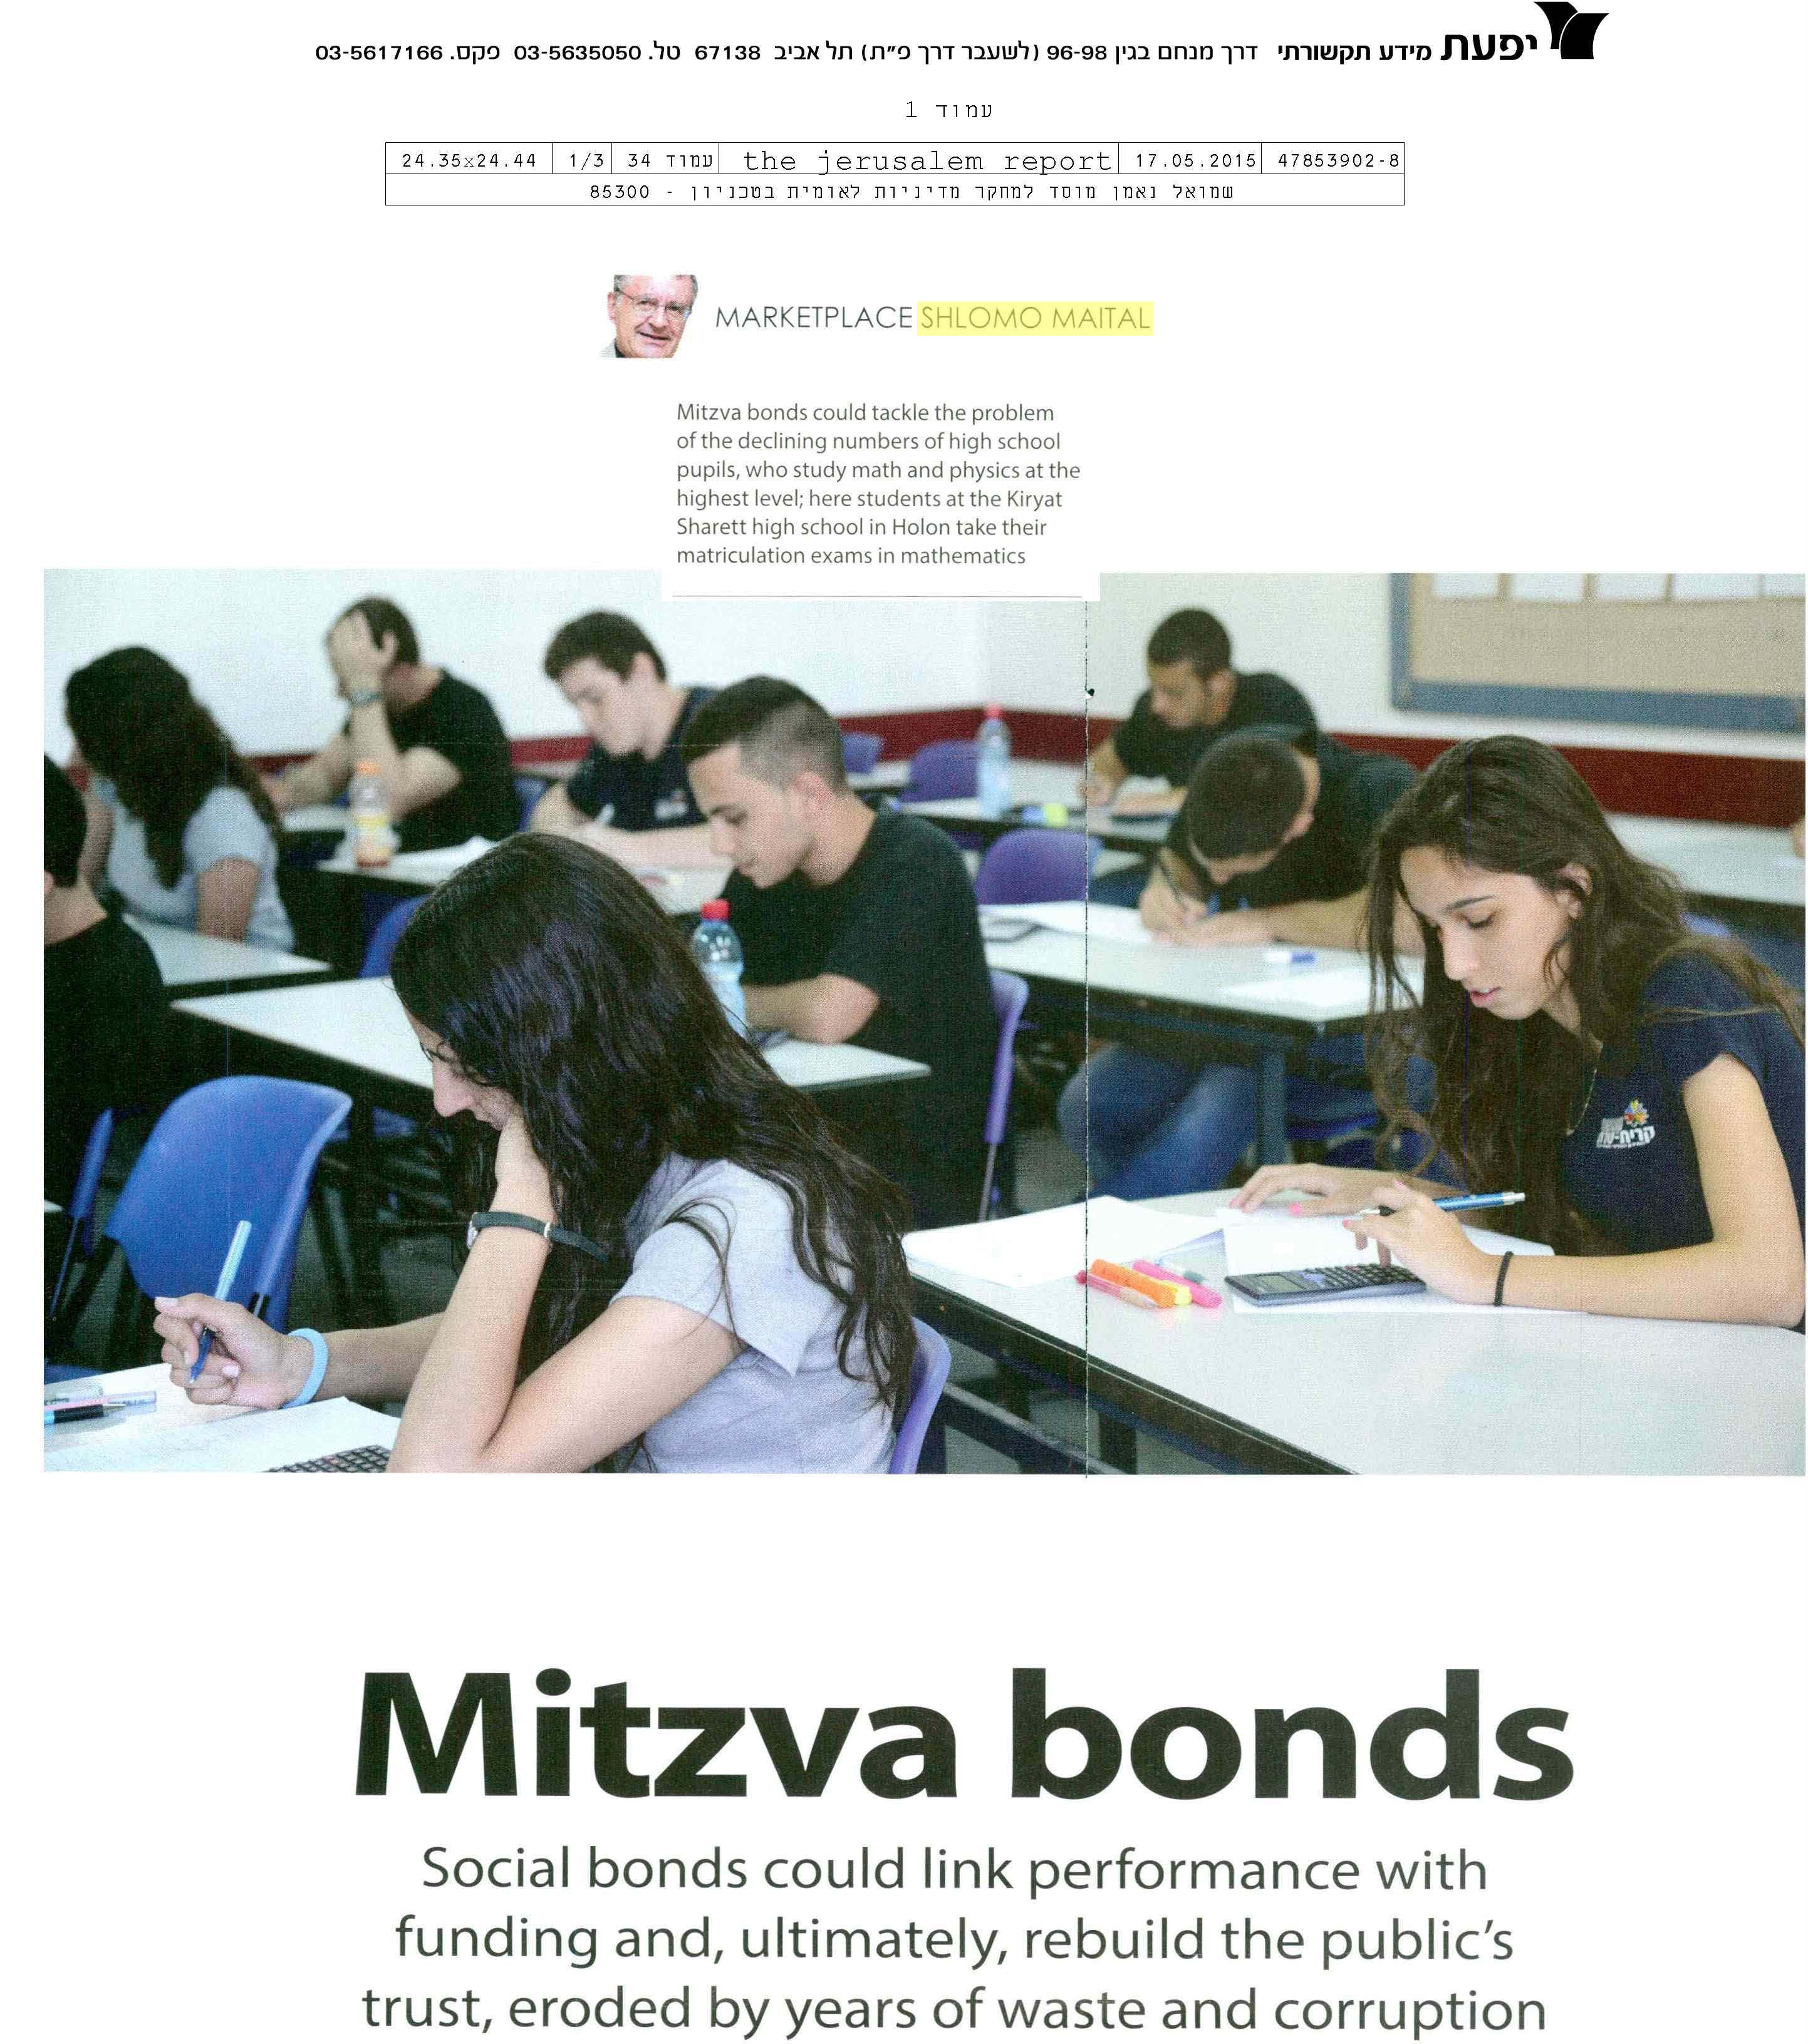 Mitzva bonds